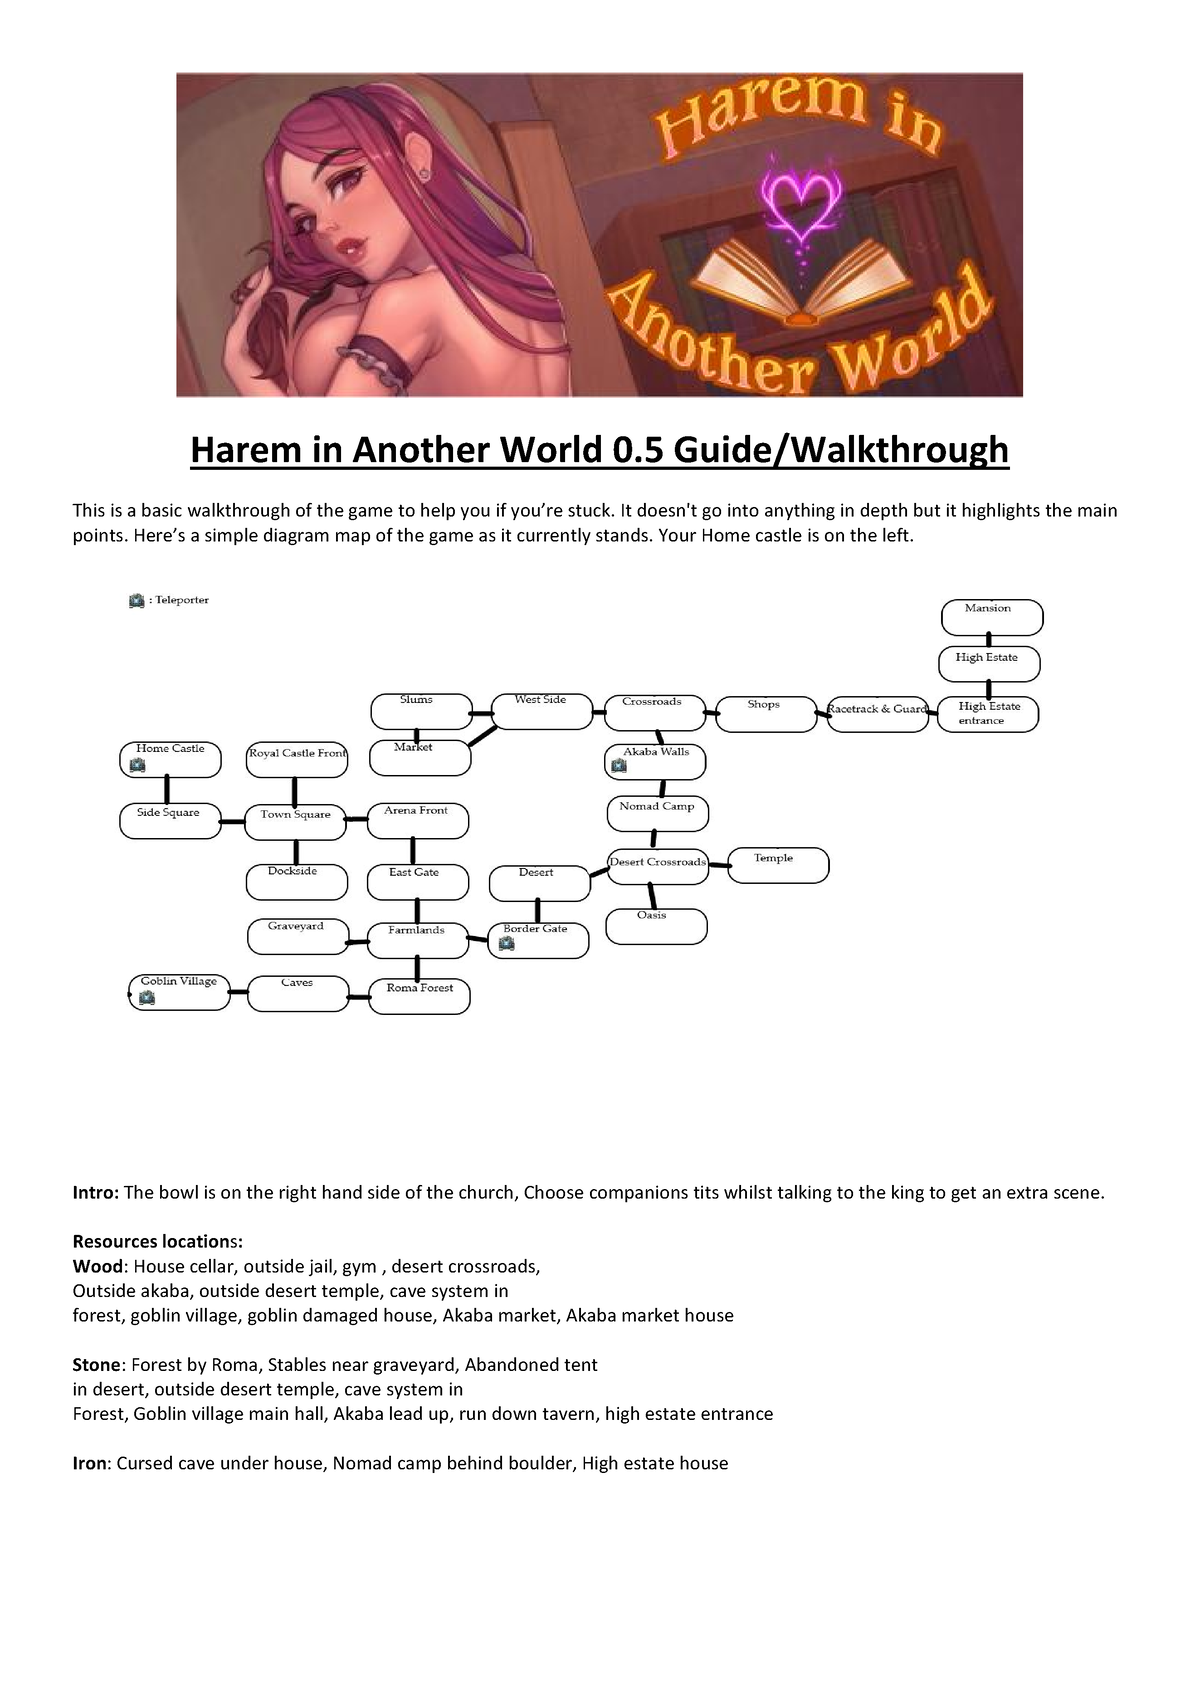 Harem in another world walkthrough